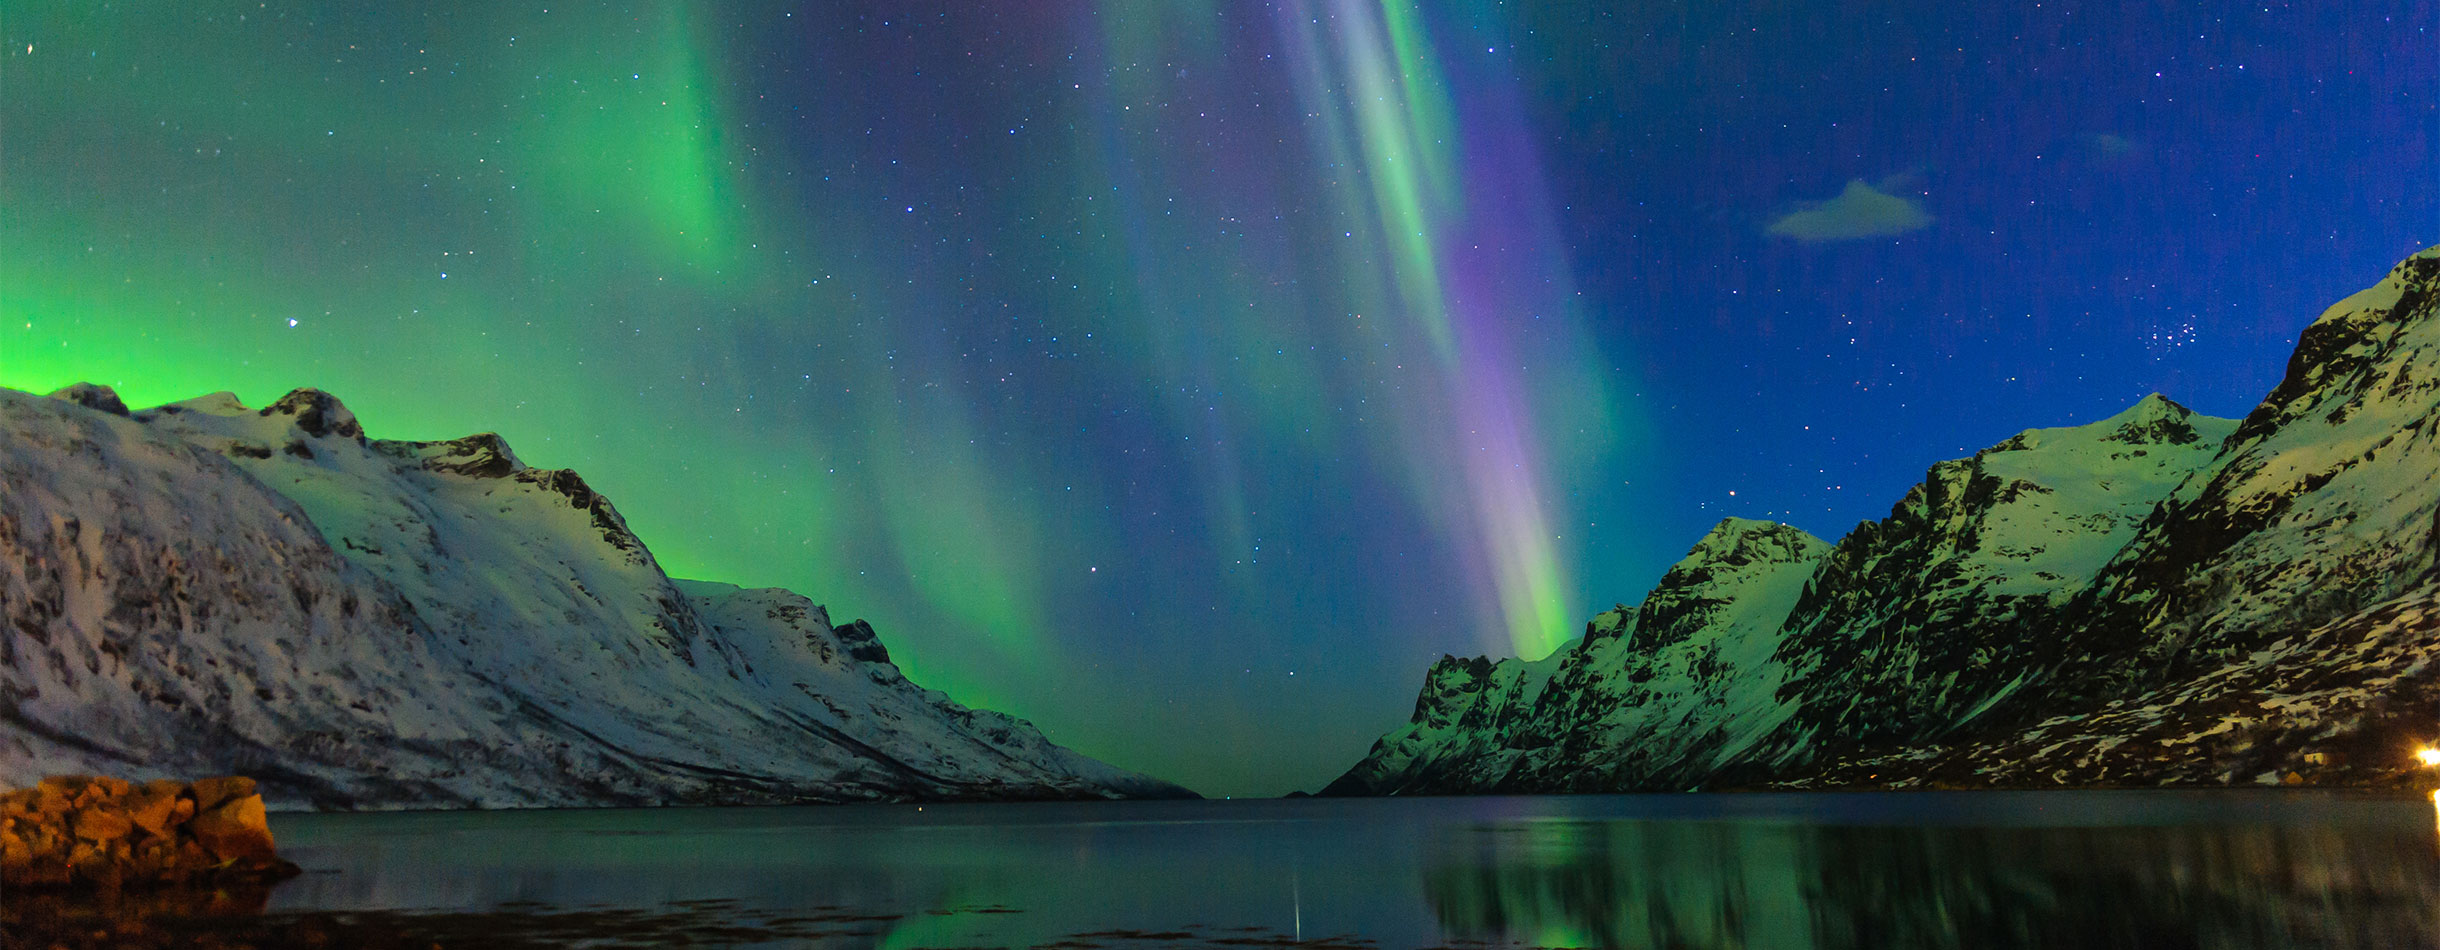 Northern lights, Alta, Norway